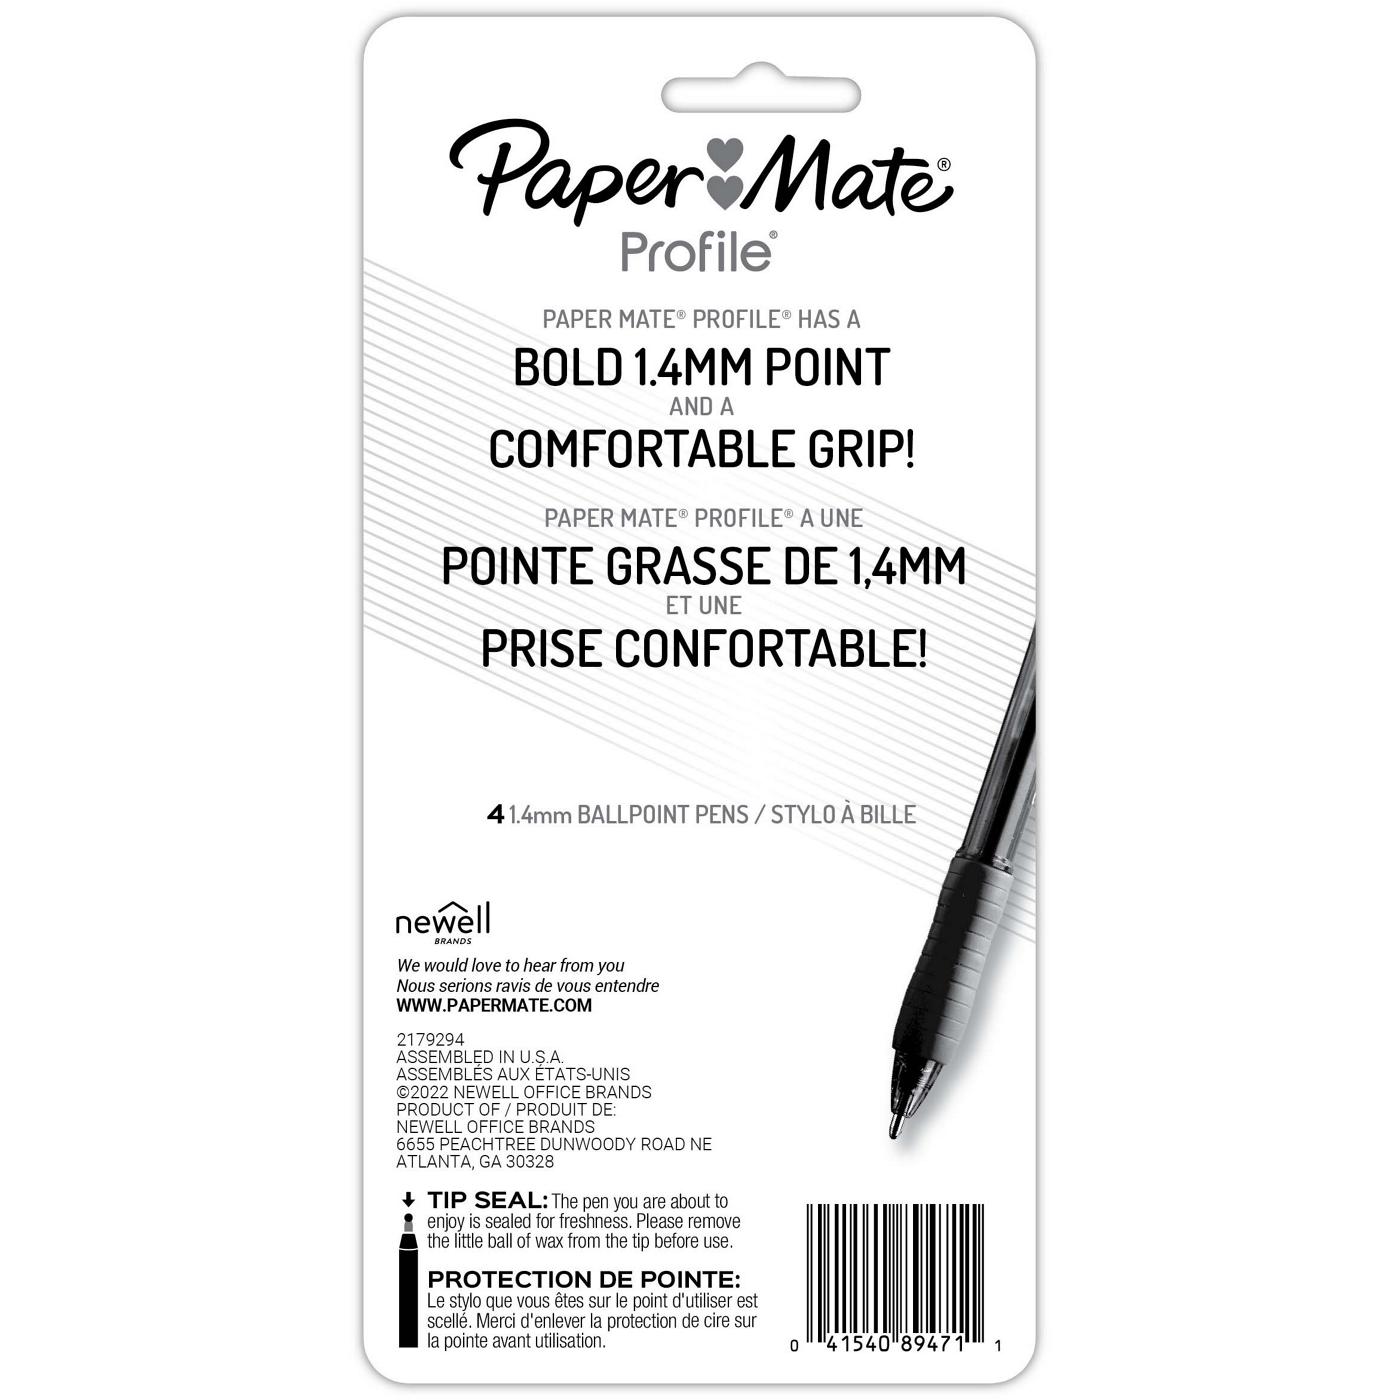 Paper Mate Profile 1.4mm Ballpoint Pens - Black Ink; image 2 of 2